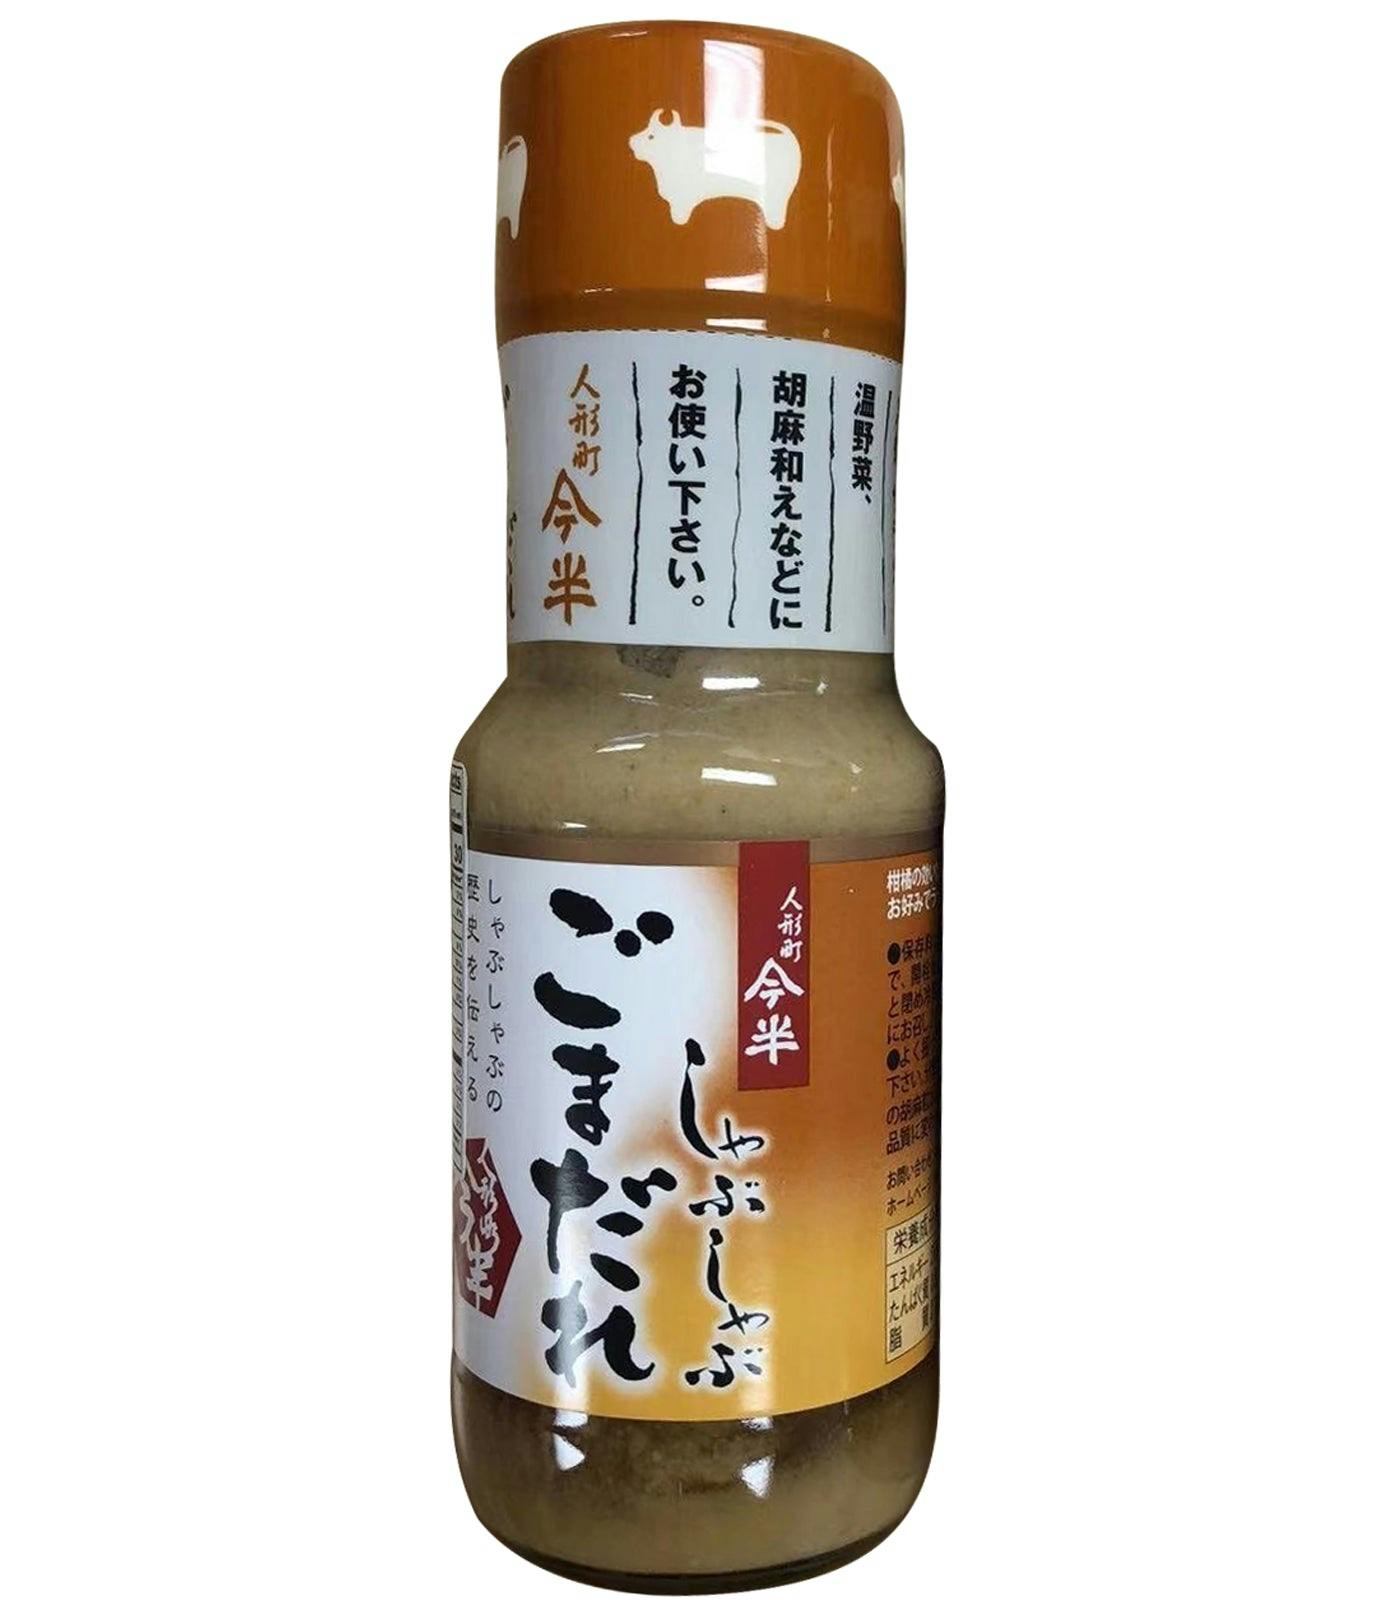 日本进口 Imahan shabu shabu 芝麻酱